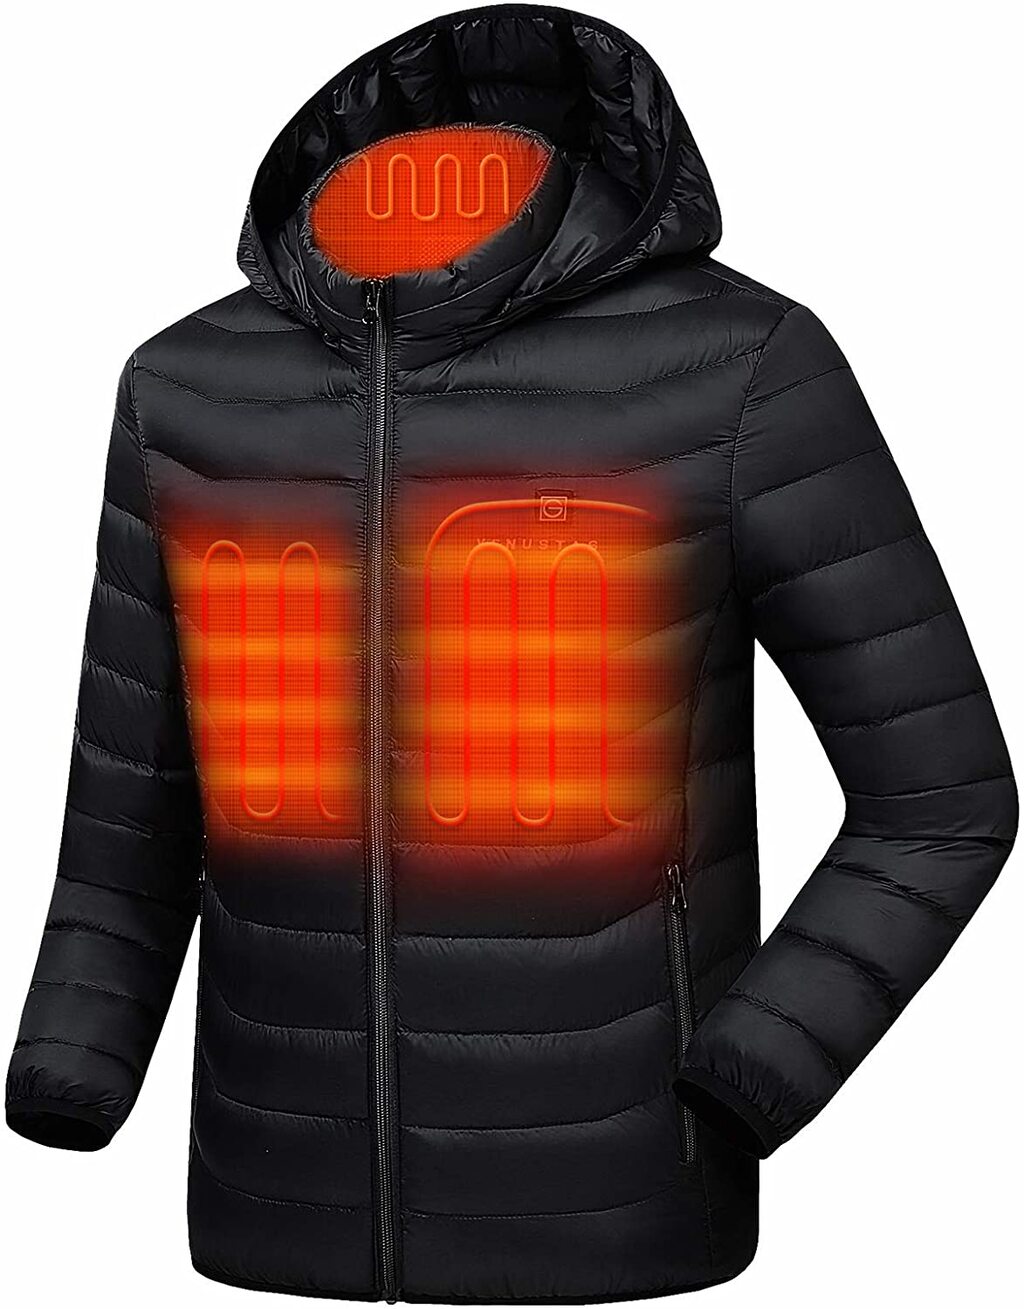 best heated jackets 2021